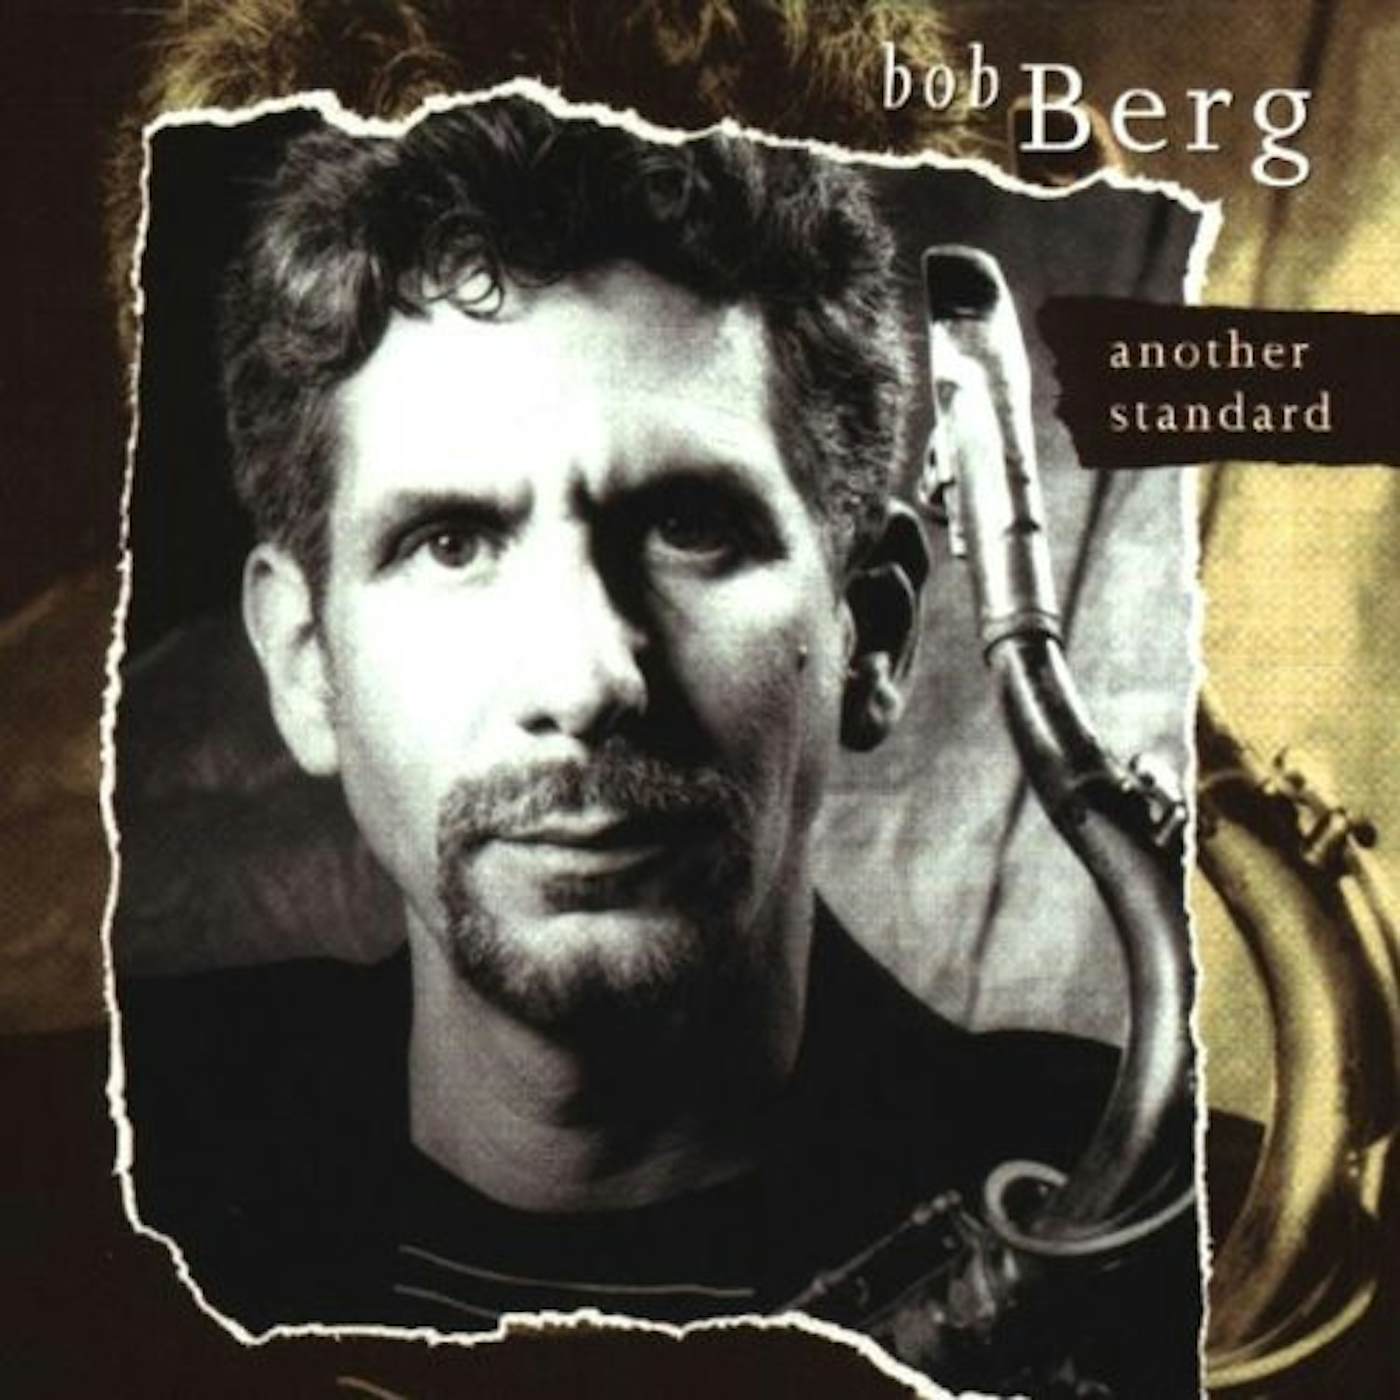 Bob Berg ANOTHER STANDARD CD